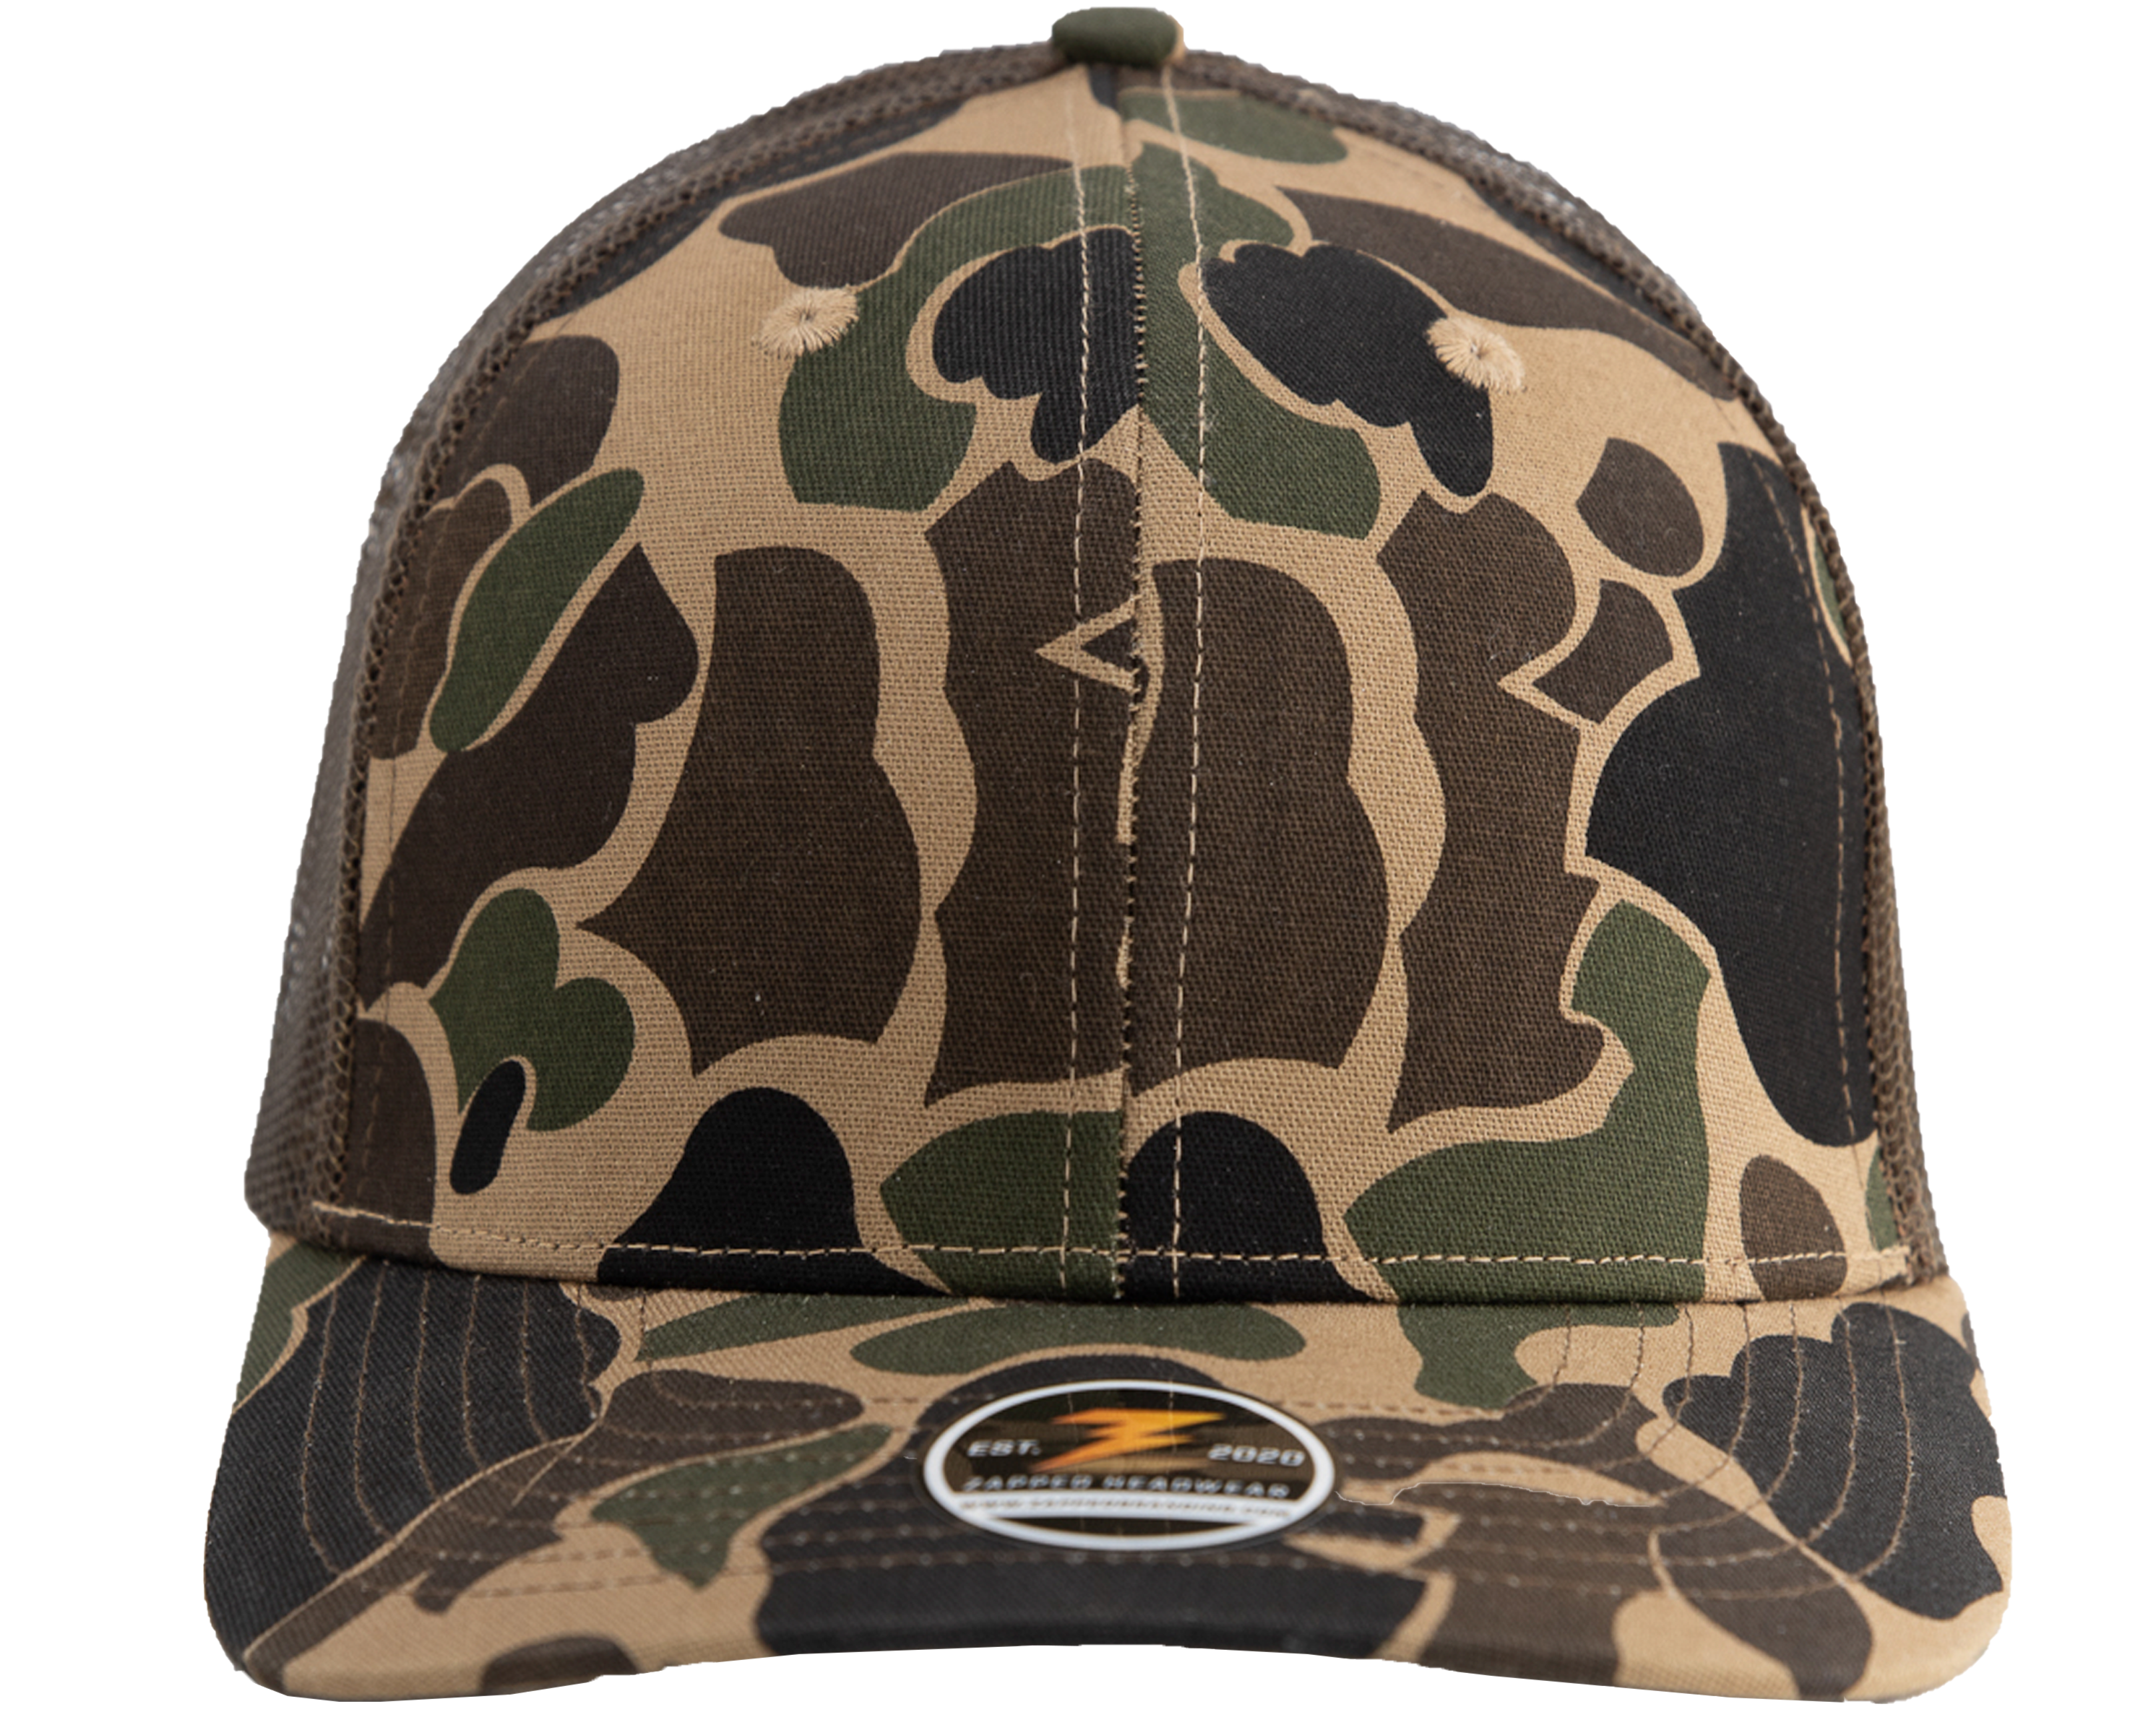 Warrior Camo Custom Hat - Old school camo- Duck camo- Snapback- hunting hats- custom hats- blank hats - leather patch hats